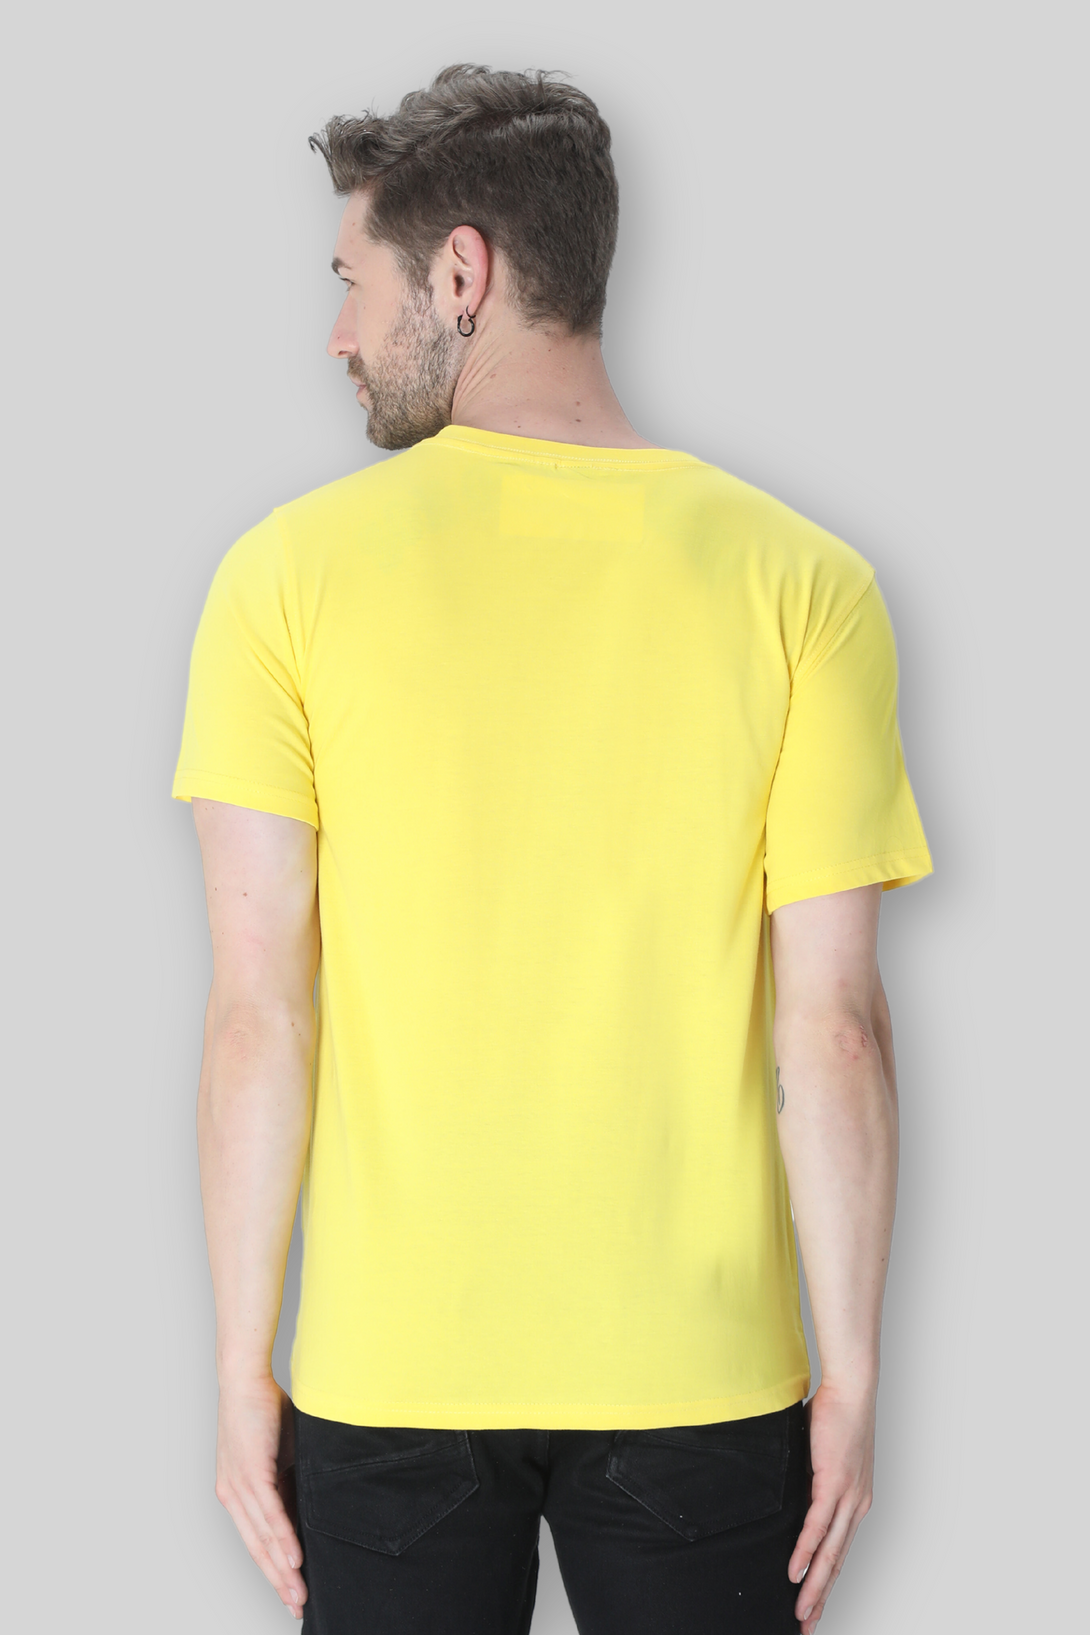 Bright Yellow T-Shirt For Men - WowWaves - 3